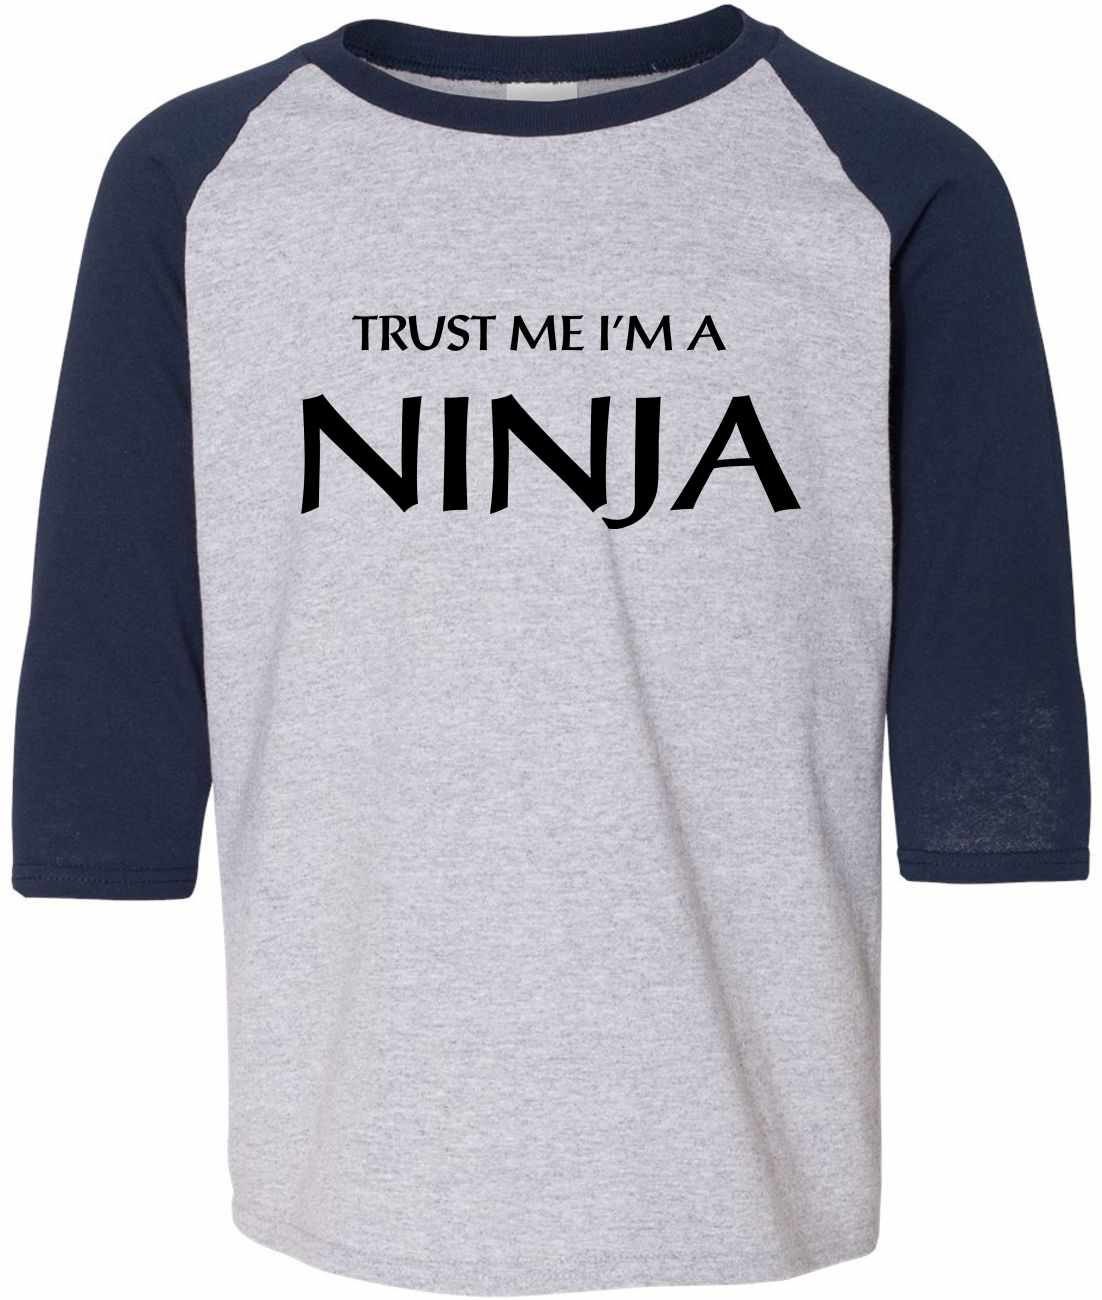 Trust Me I'm a NINJA on Youth Baseball Shirt